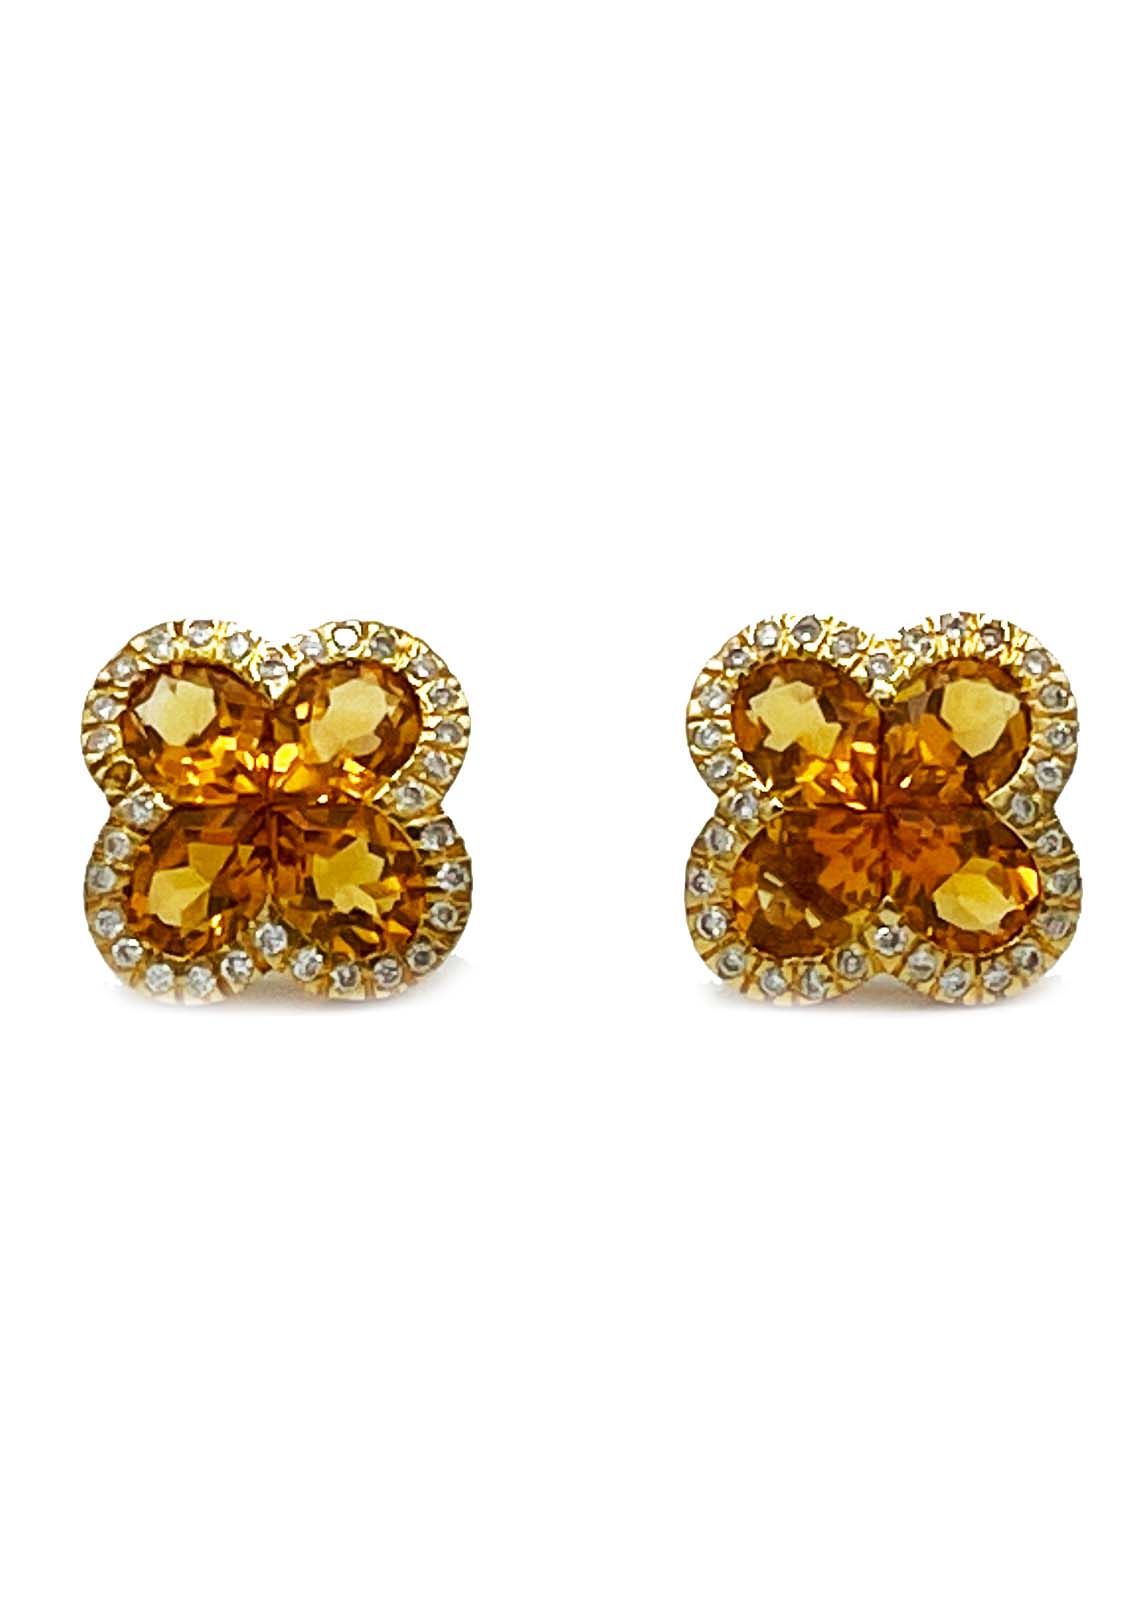 18k Yellow Gold Topaz & Diamond Stud Earrings Image